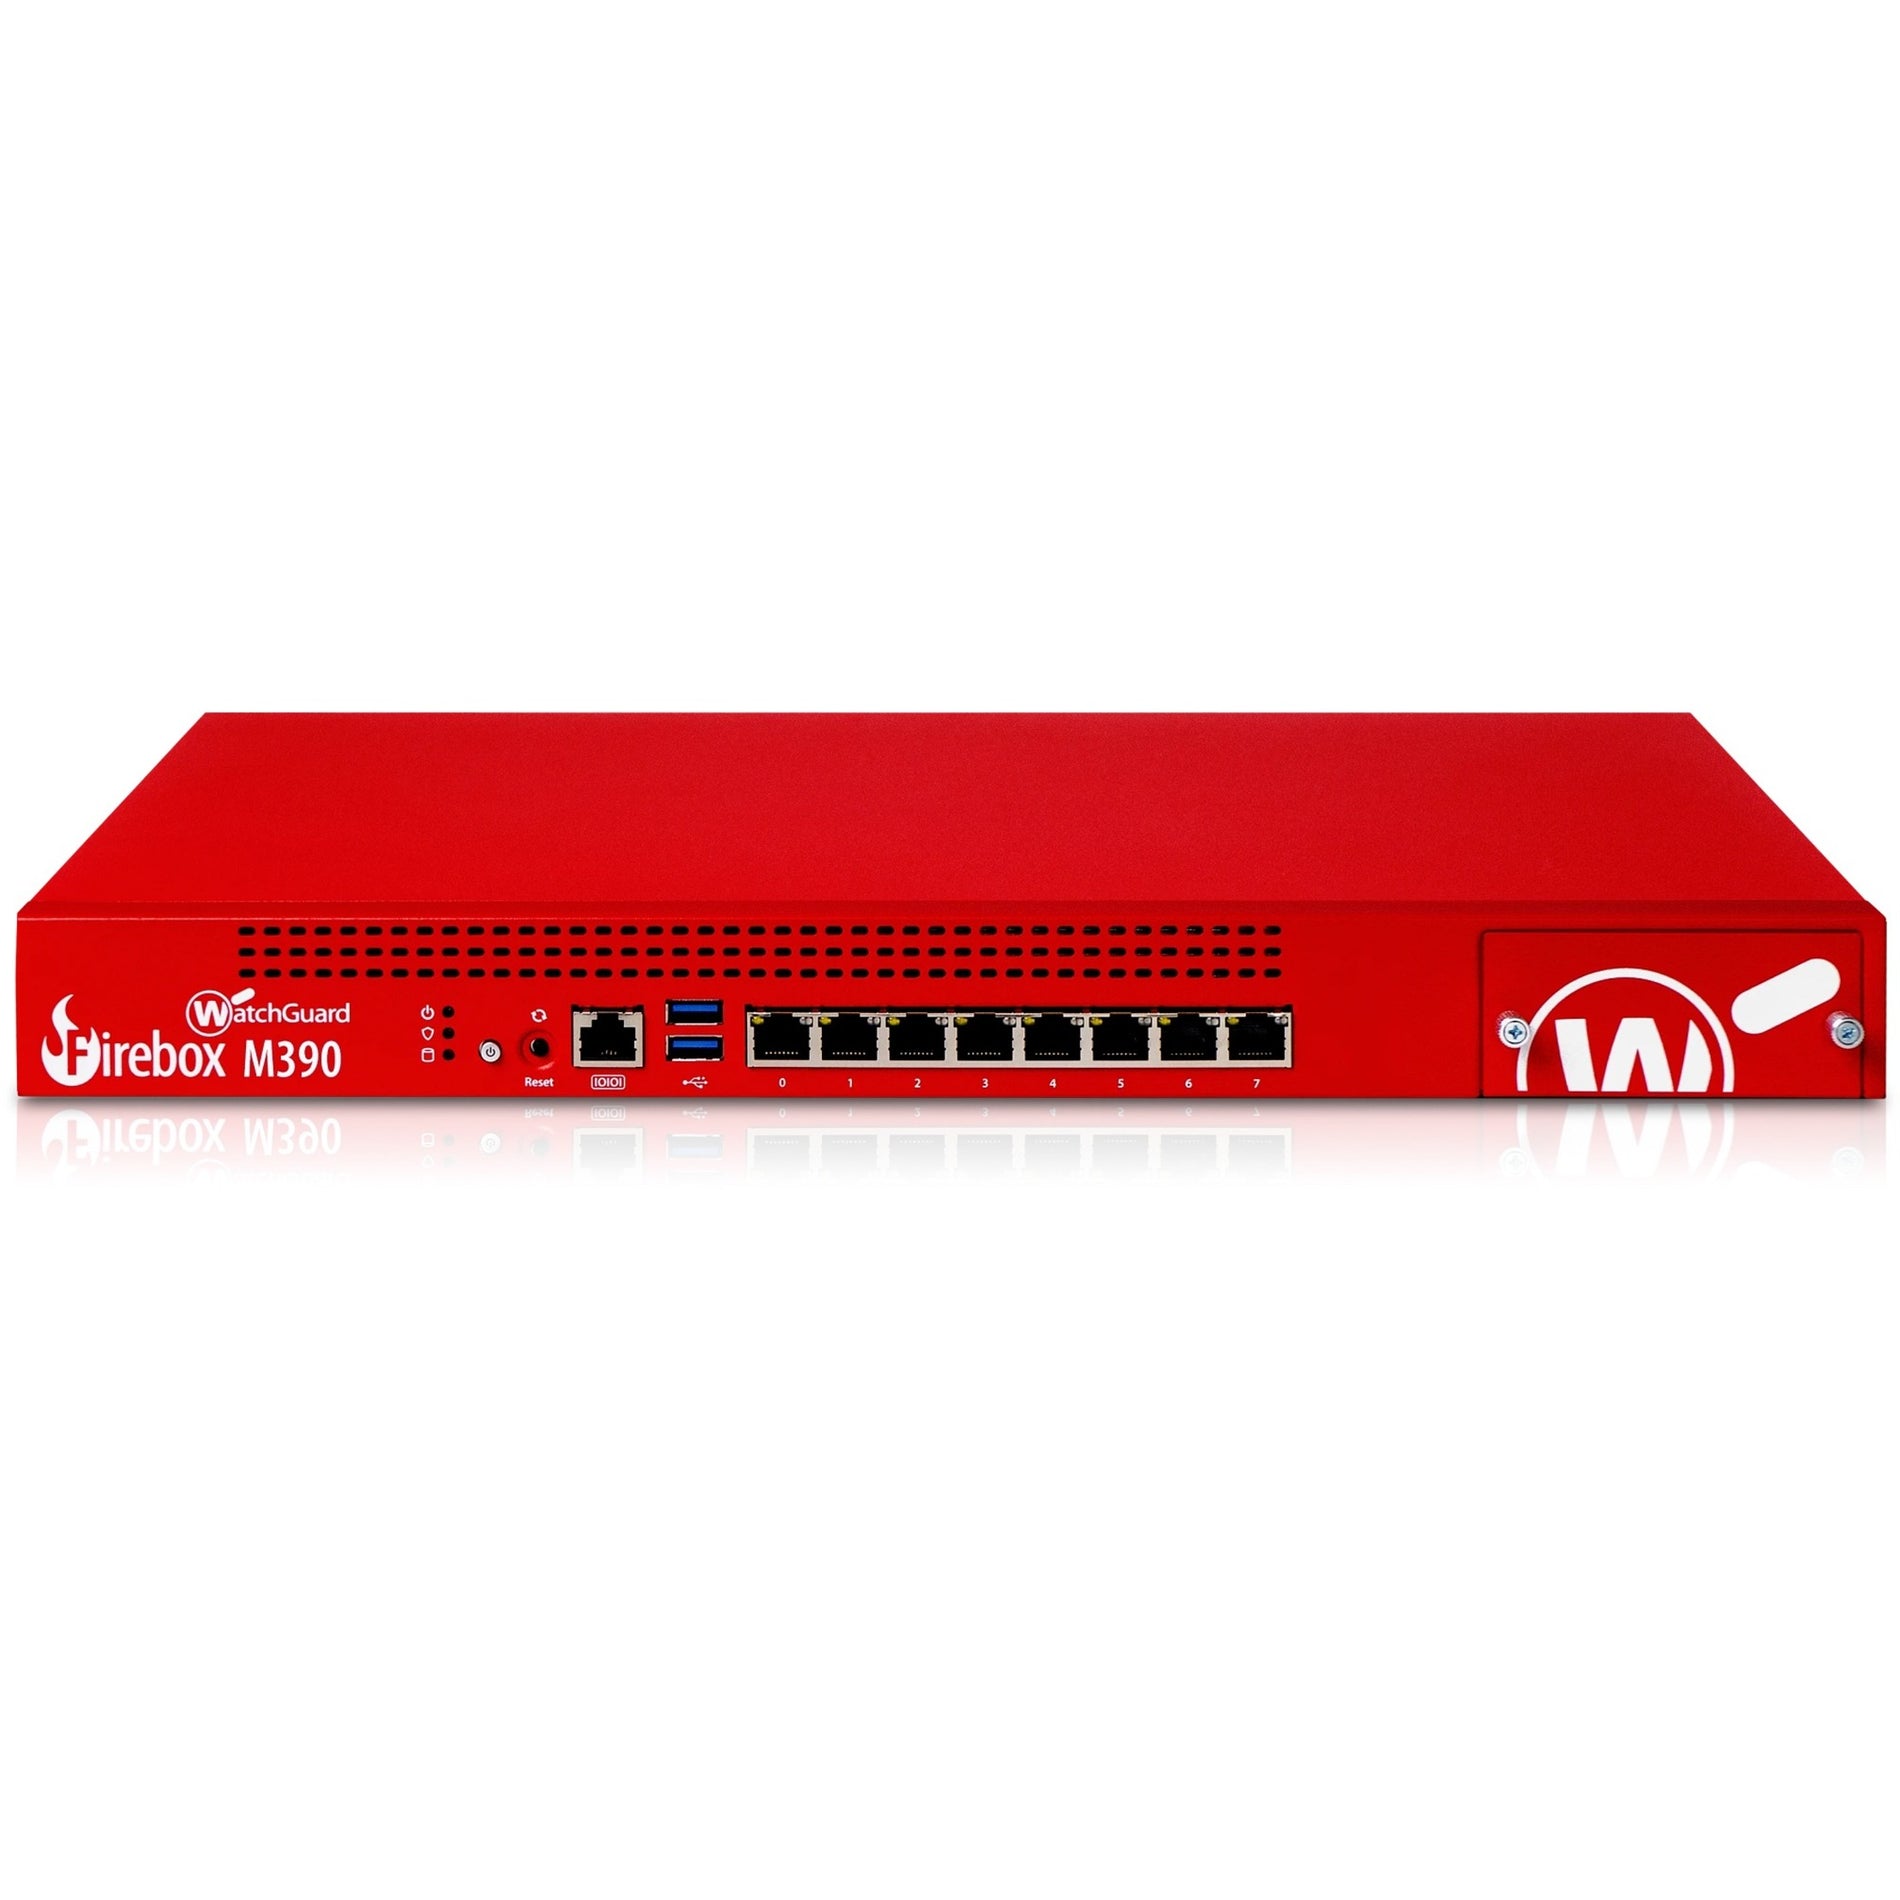 WatchGuard WGM39001601 Firebox M390 High Availability Firewall, 8 Ports, Gigabit Ethernet, Malware Protection